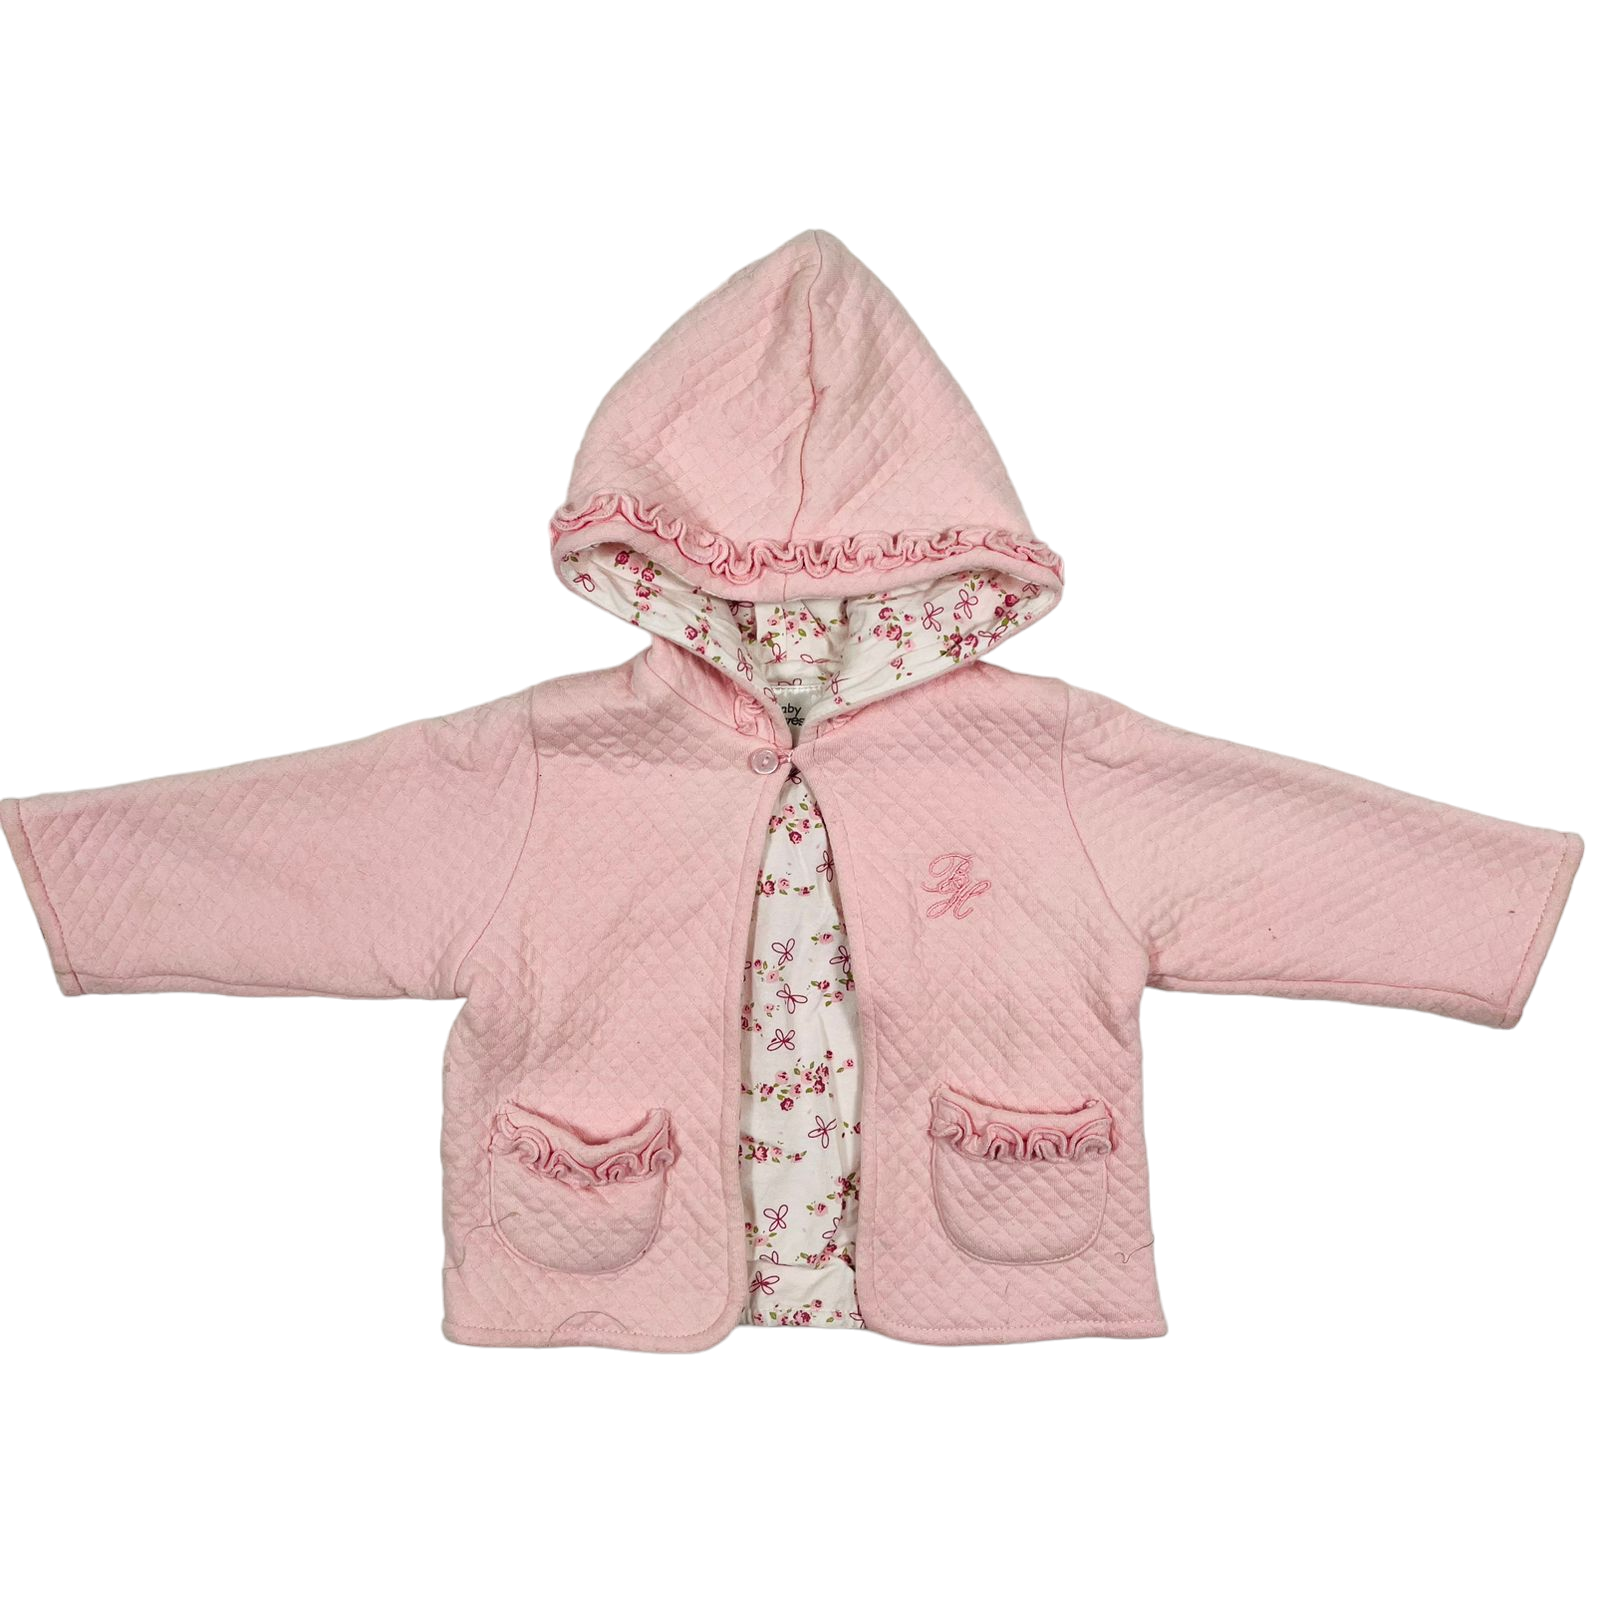 Abrigo rosa forrado en algodon diseño de flores con bolsillo y gorro con vuelitos